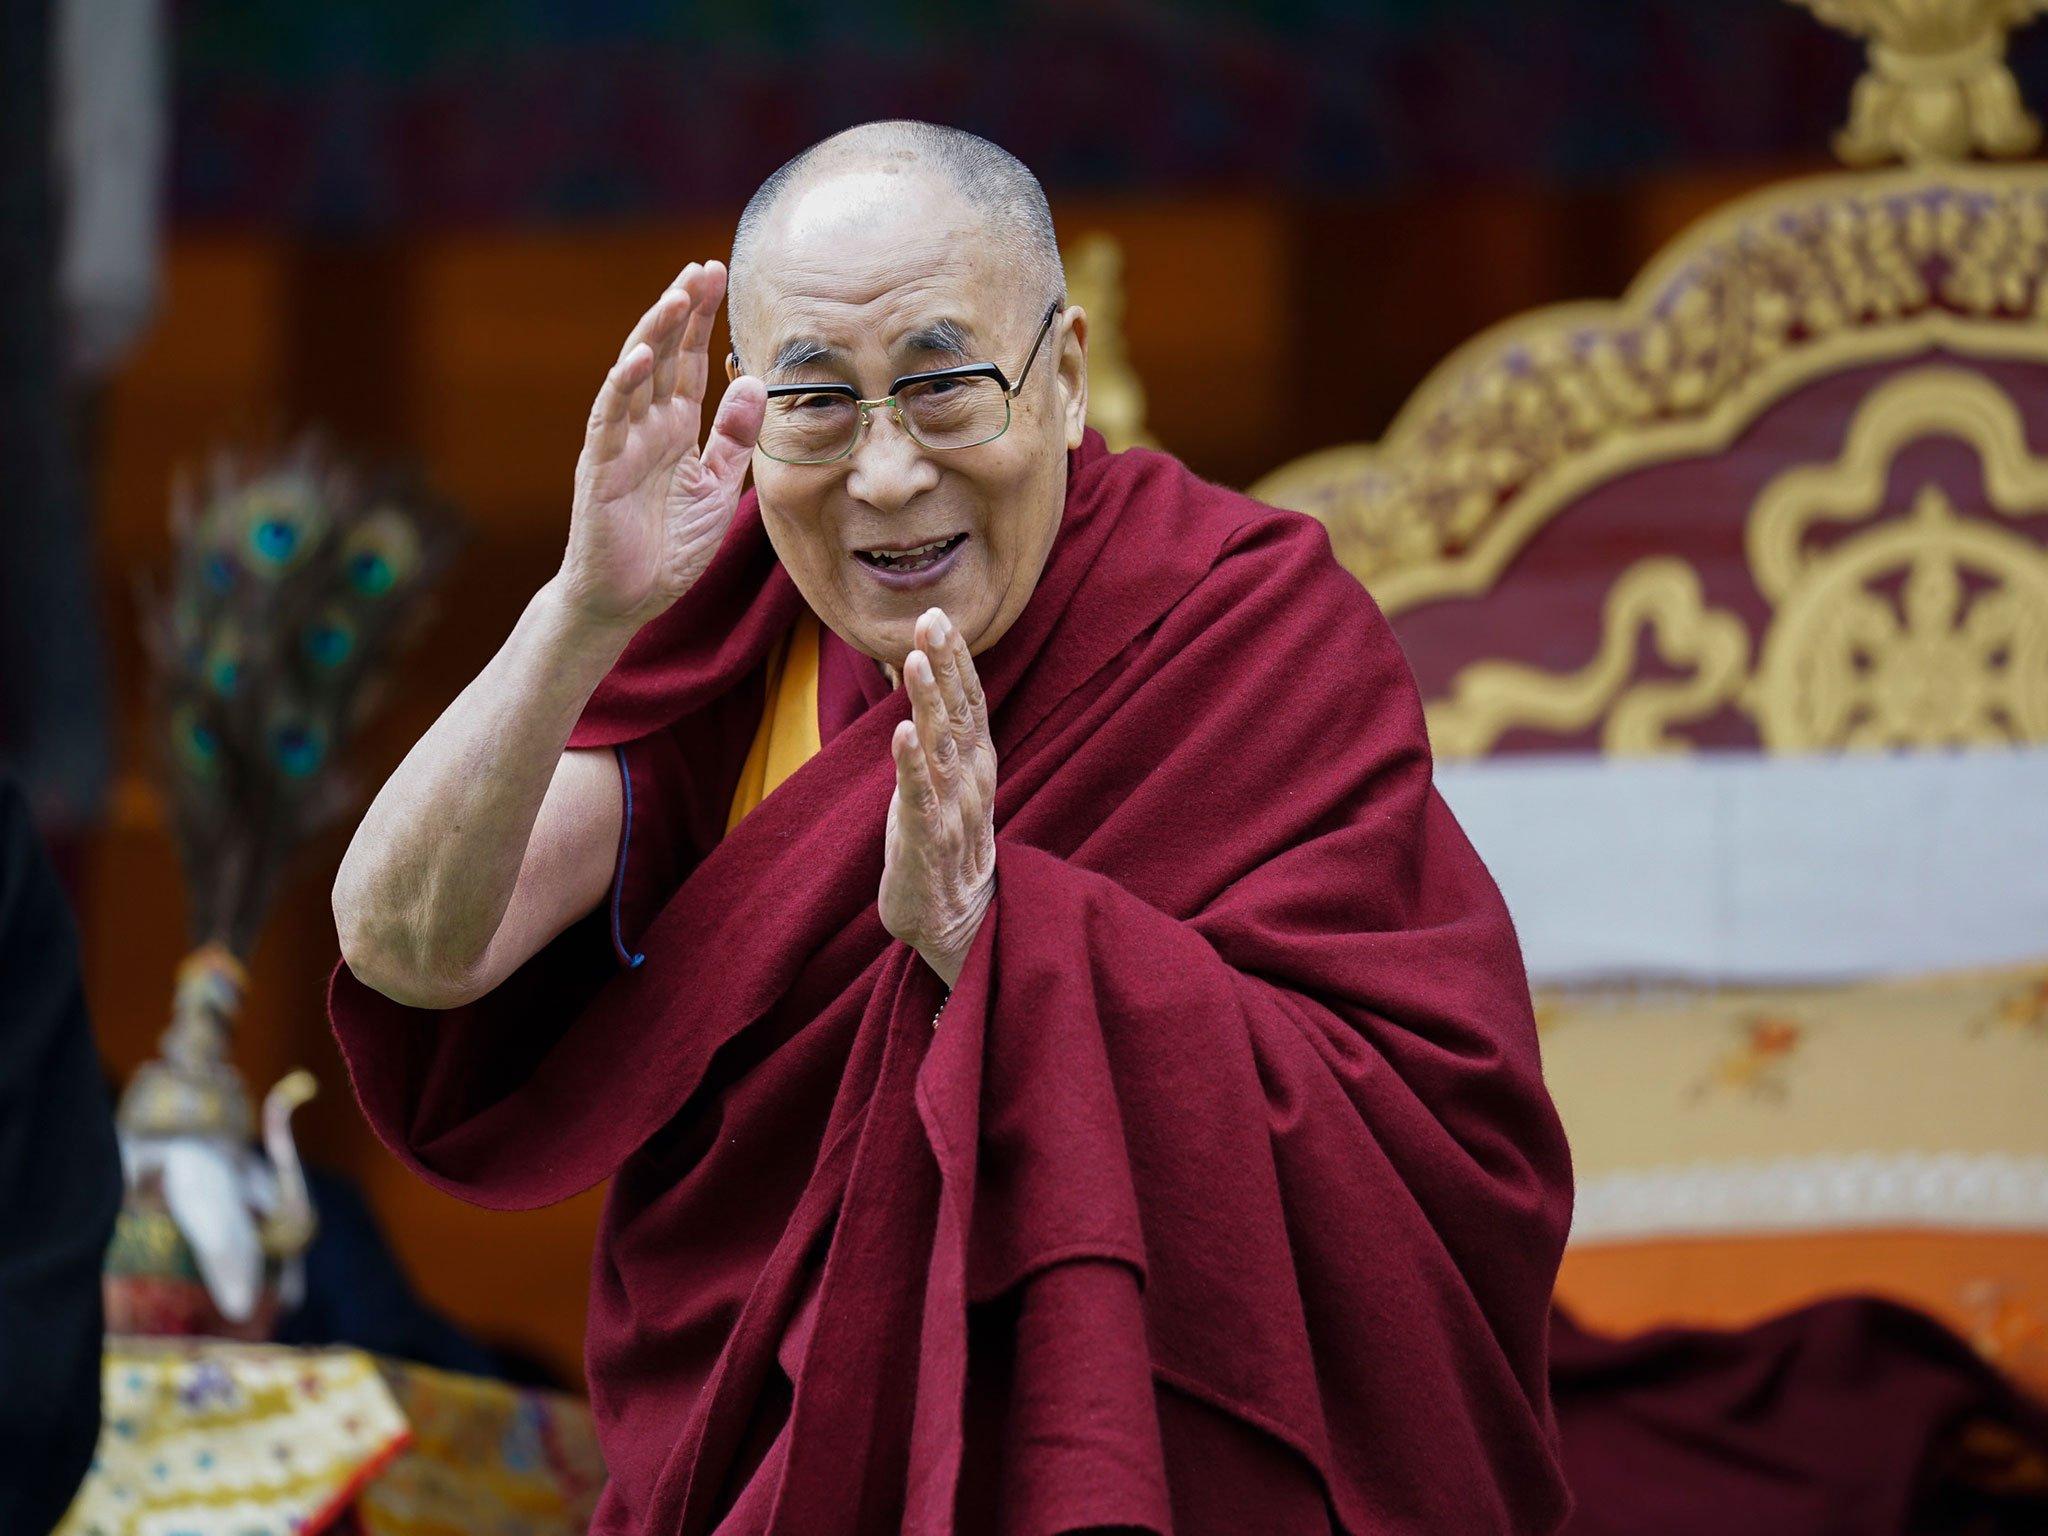 Dalai Lama says 'Europe belongs to the Europeans' and suggests